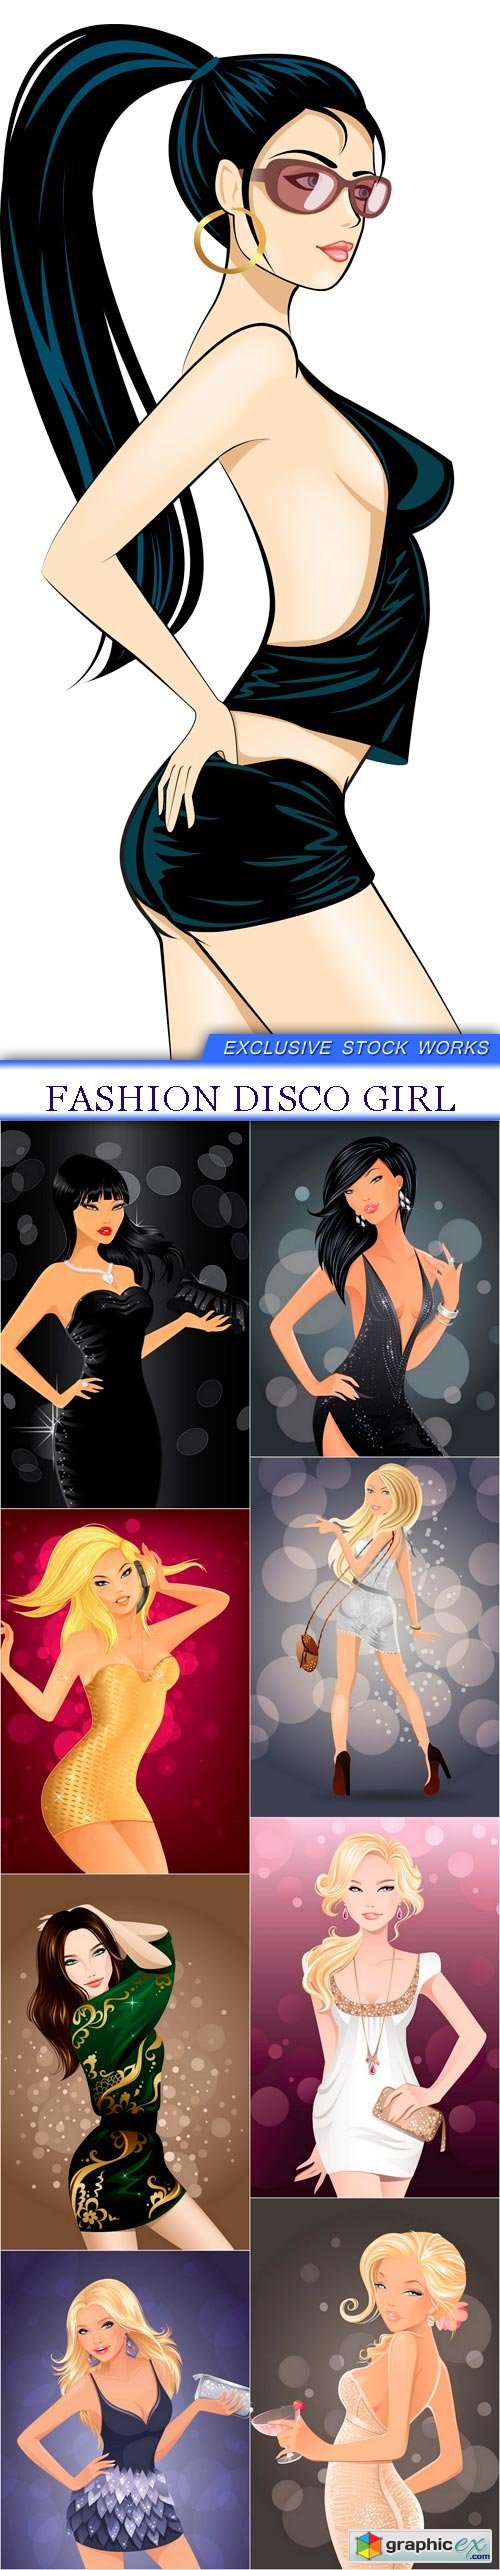 Fashion disco girl 9X JPEG